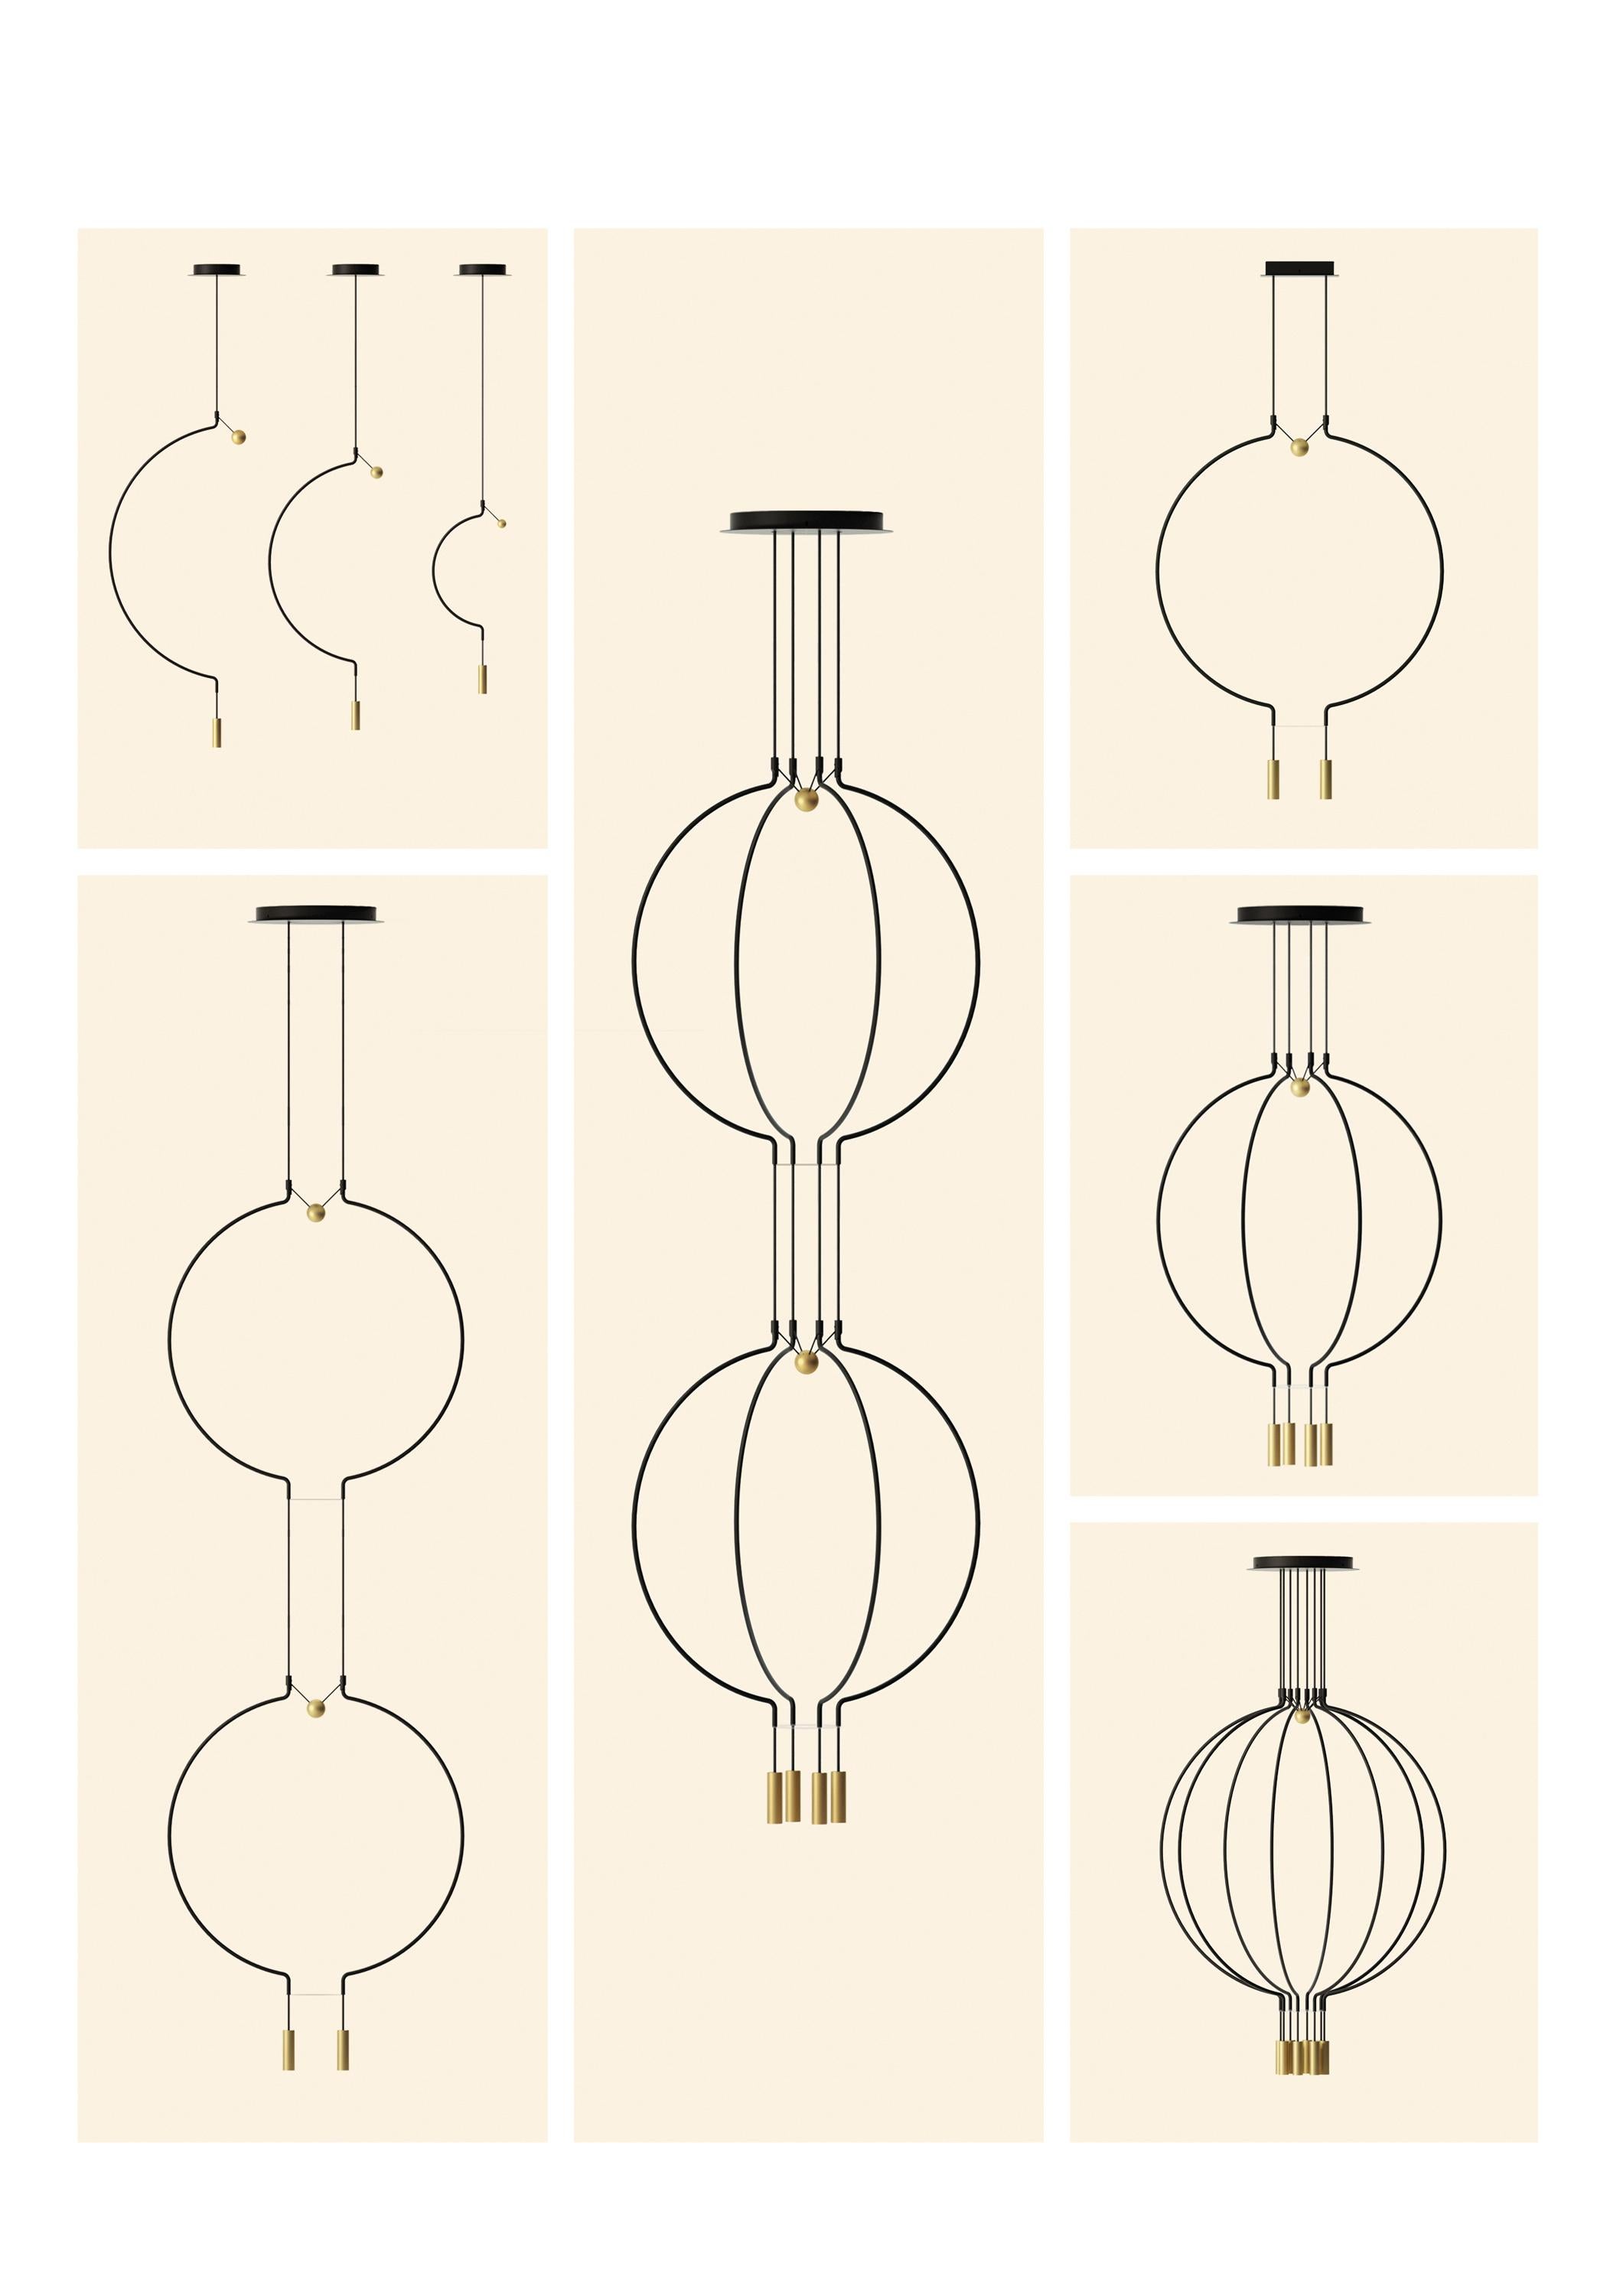 Axolight Liaison Model M1 Pendant Lamp in Black/Gold by Sara Moroni For Sale 3